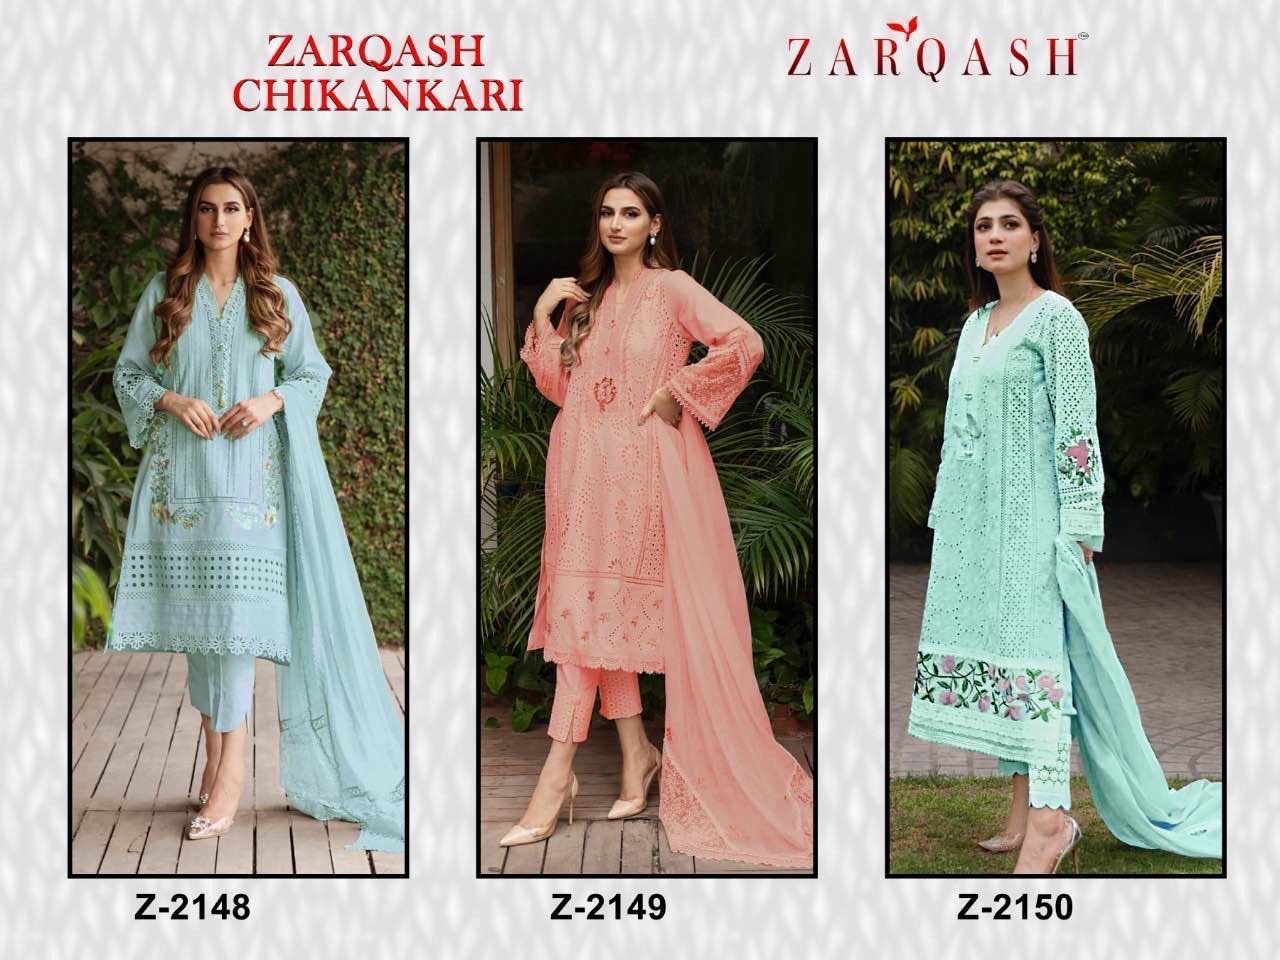 Zarqash Chikankari Z-2148 to Z-2150